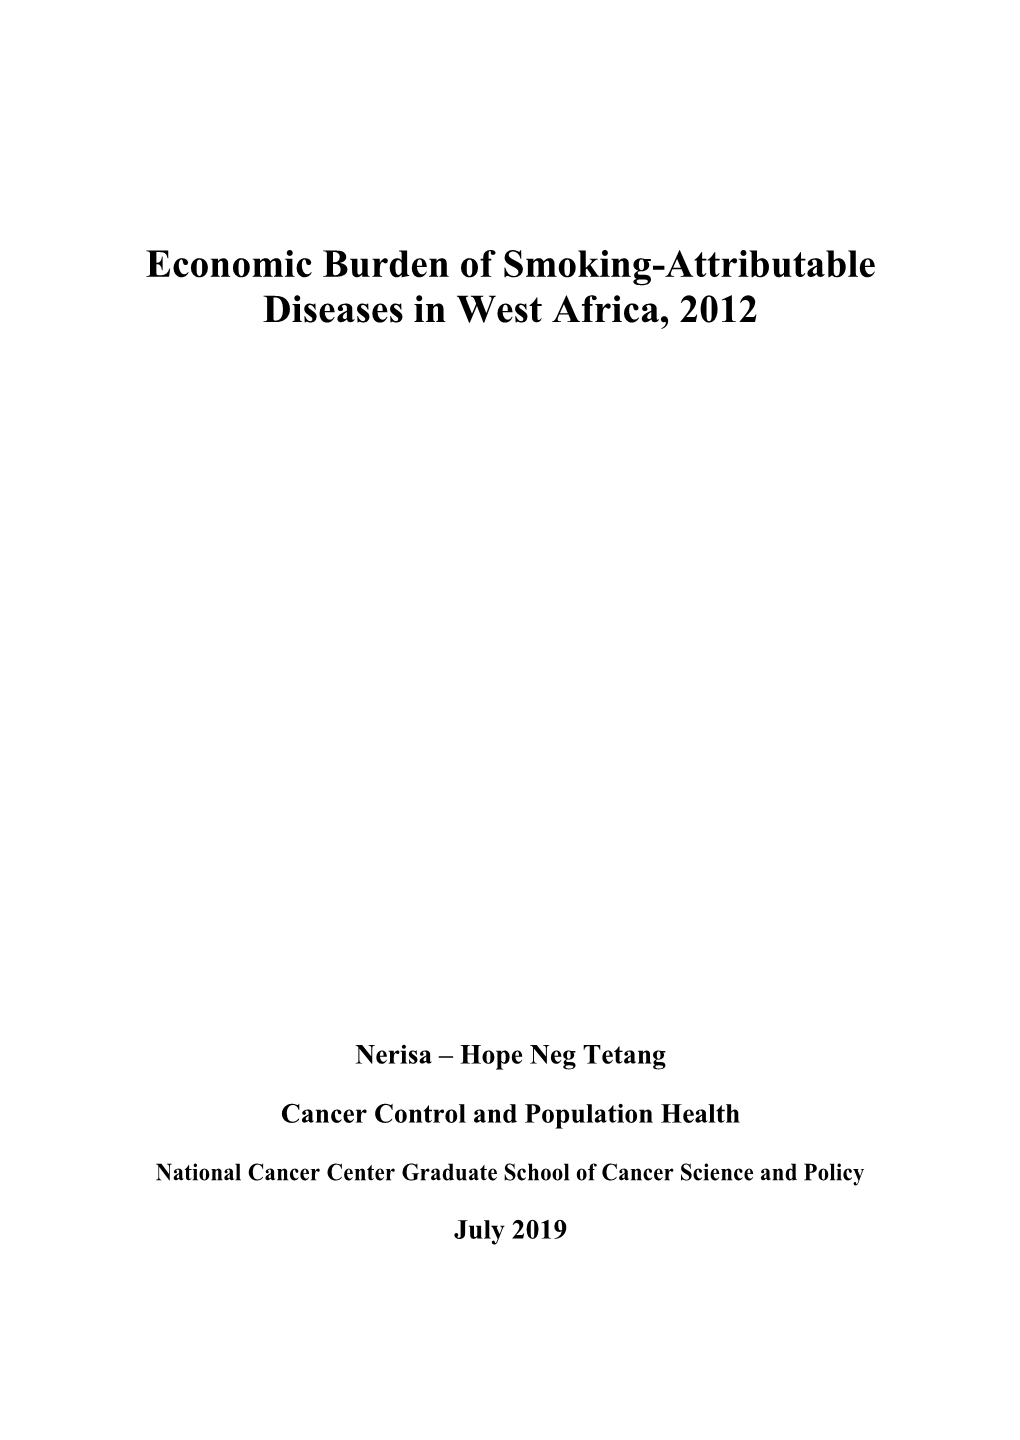 Economic Burden of Smoking-Attributable Diseases in West Africa, 2012